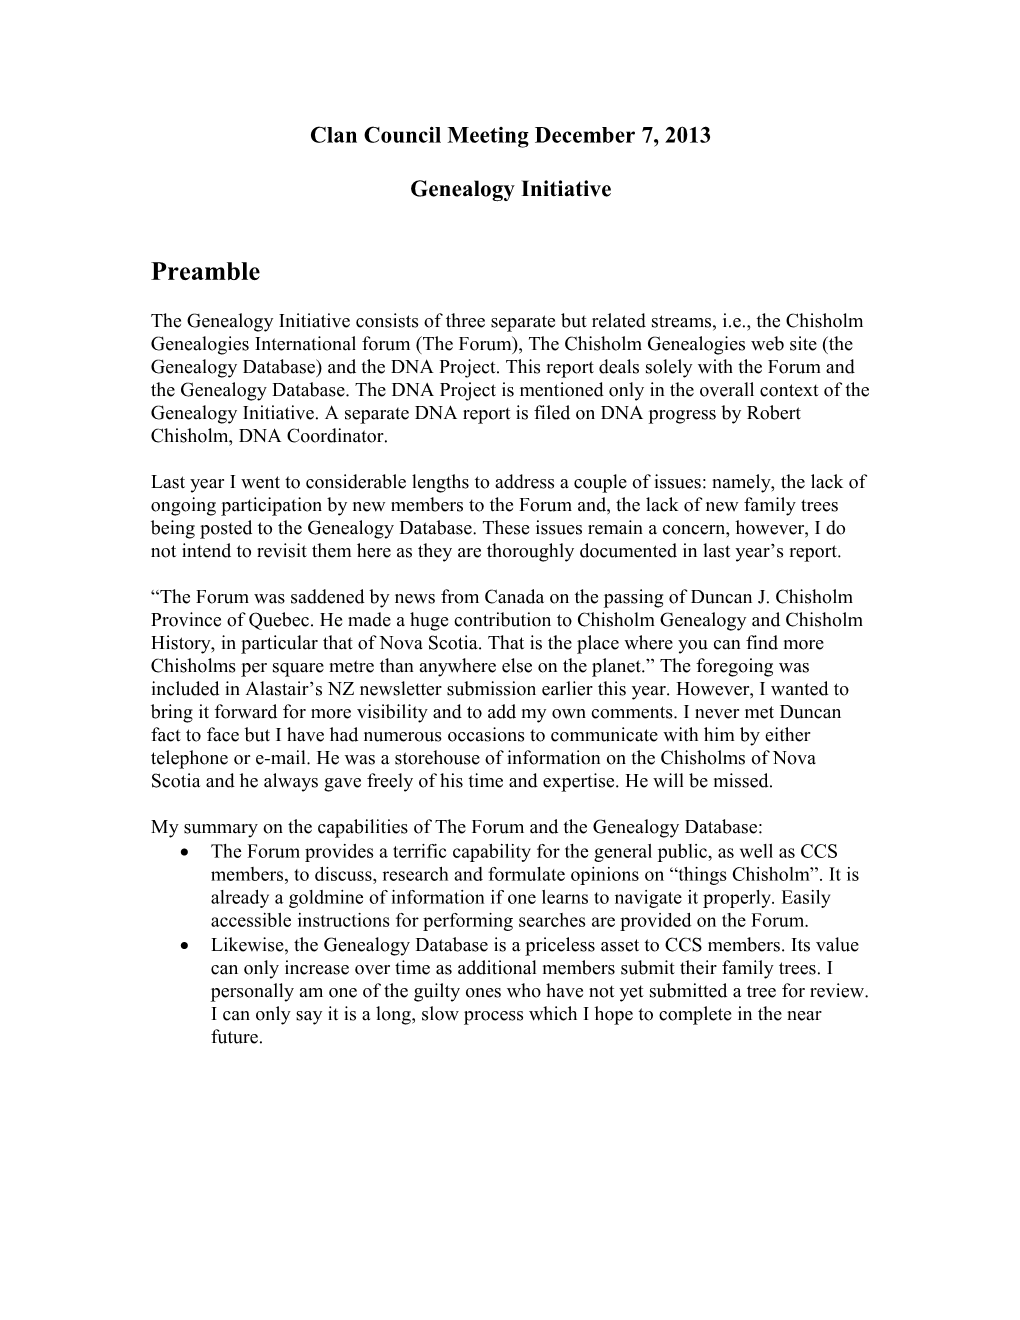 Chisholm Genealogy Database Report